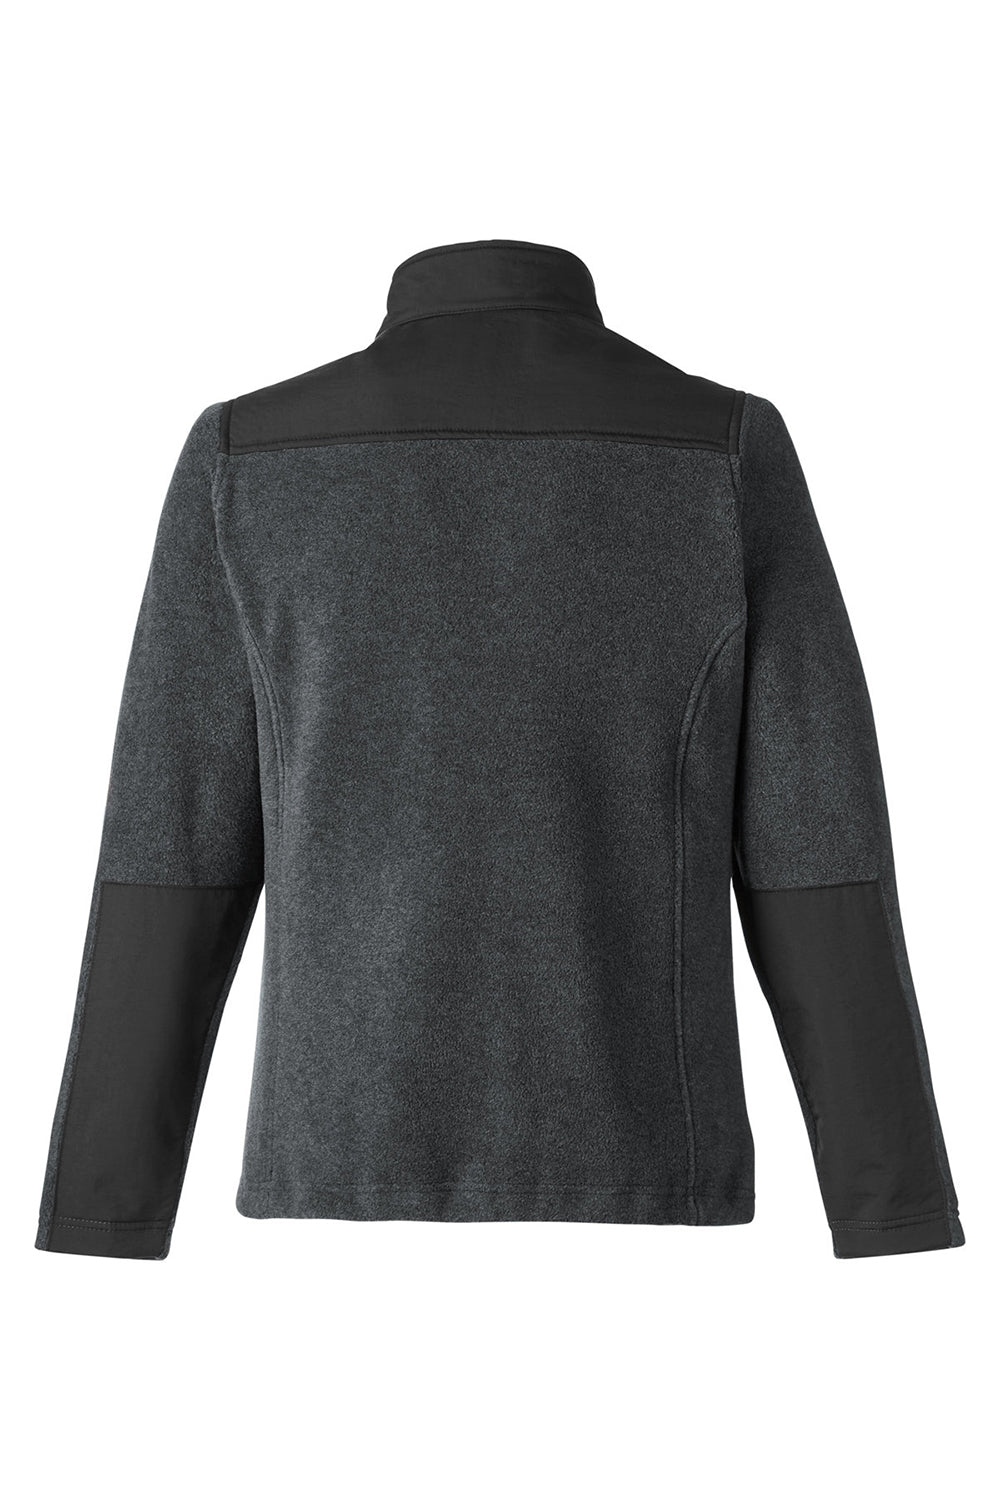 Core 365 CE890W Womens Journey Summit Hybrid Full Zip Jacket Heather Charcoal Grey/Black Flat Back